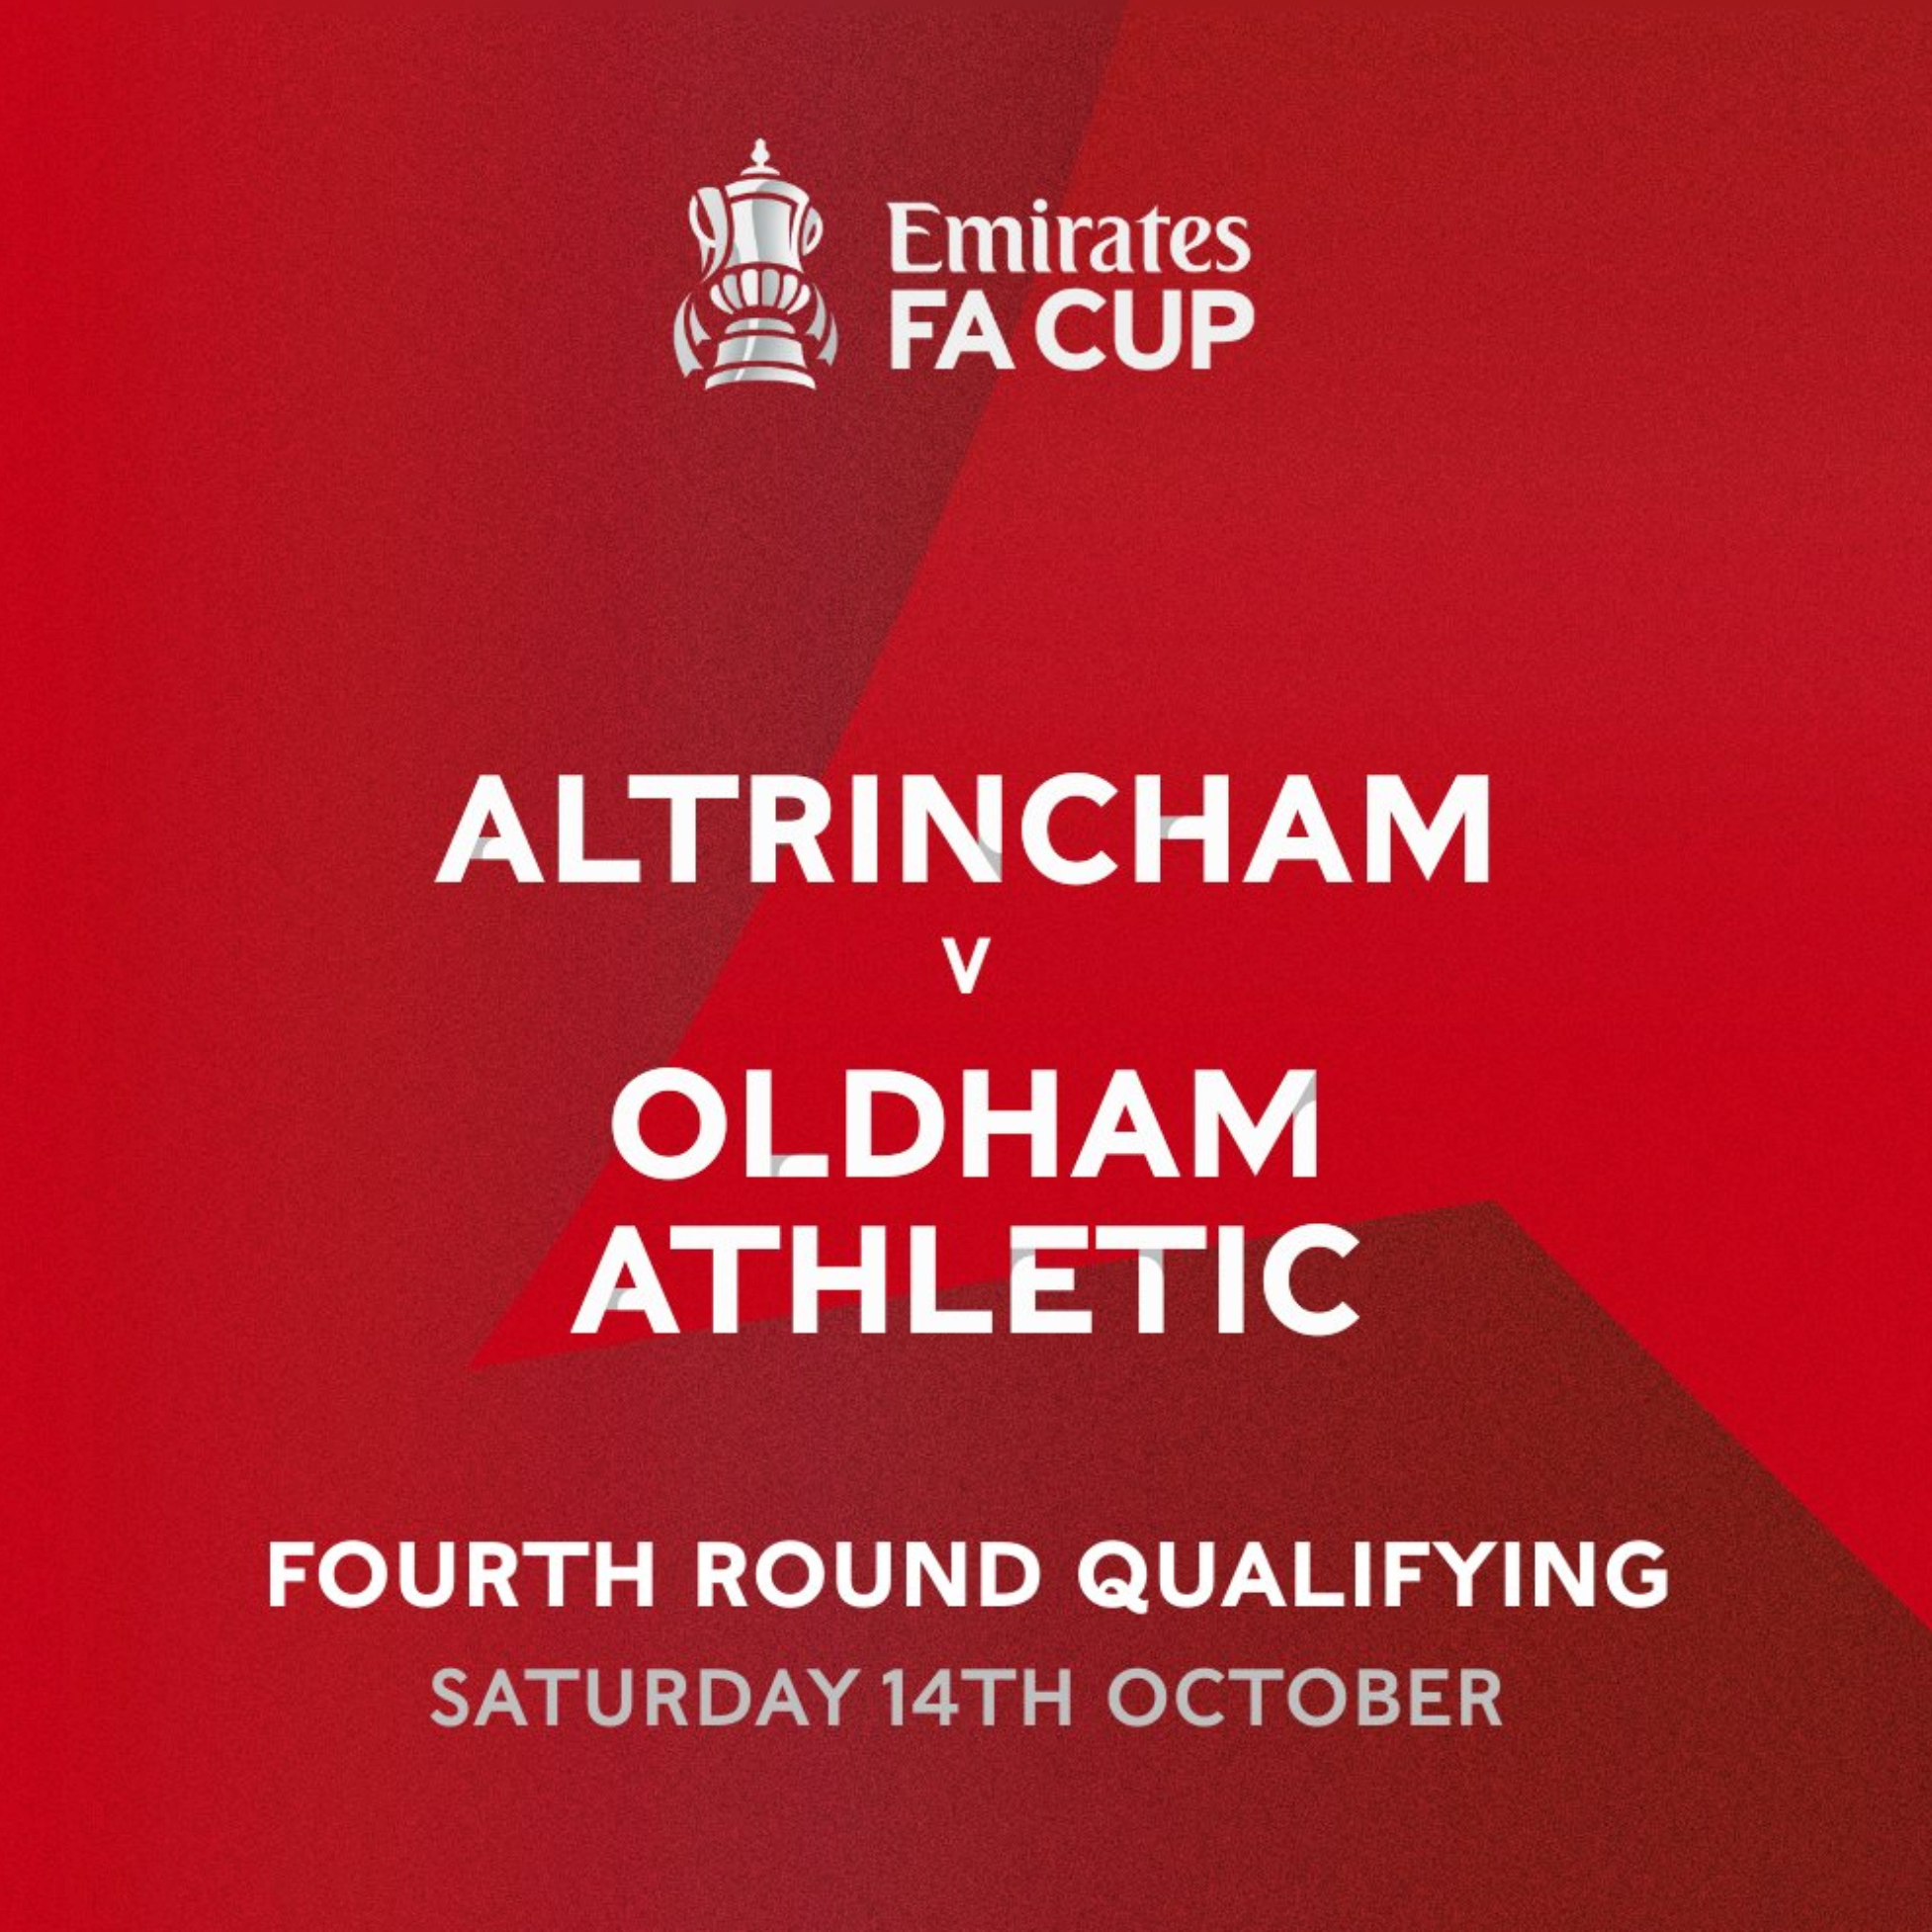 Altrincham (A) Tickets & Travel - News - Oldham Athletic